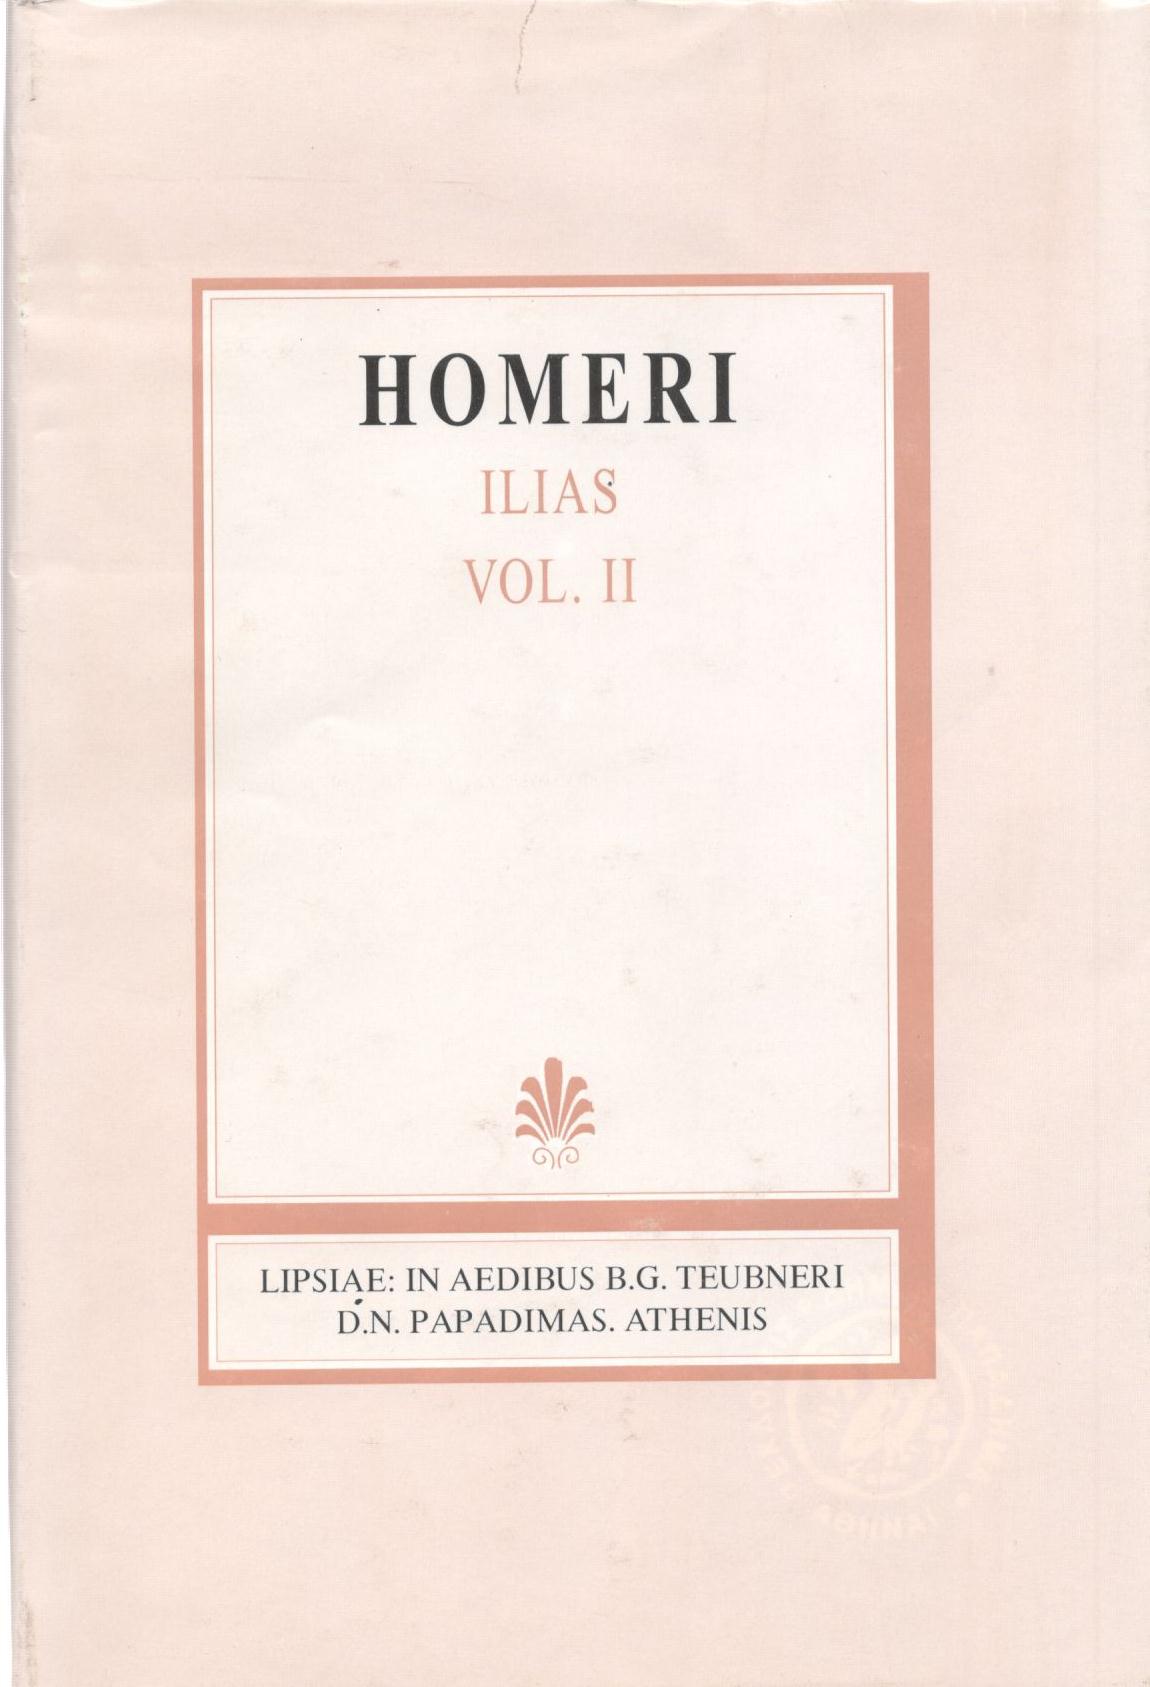 Homeri, Ilias, Vol. II, [Ομήρου, Ιλιάς, Ραψωδίαι Ν-Ω, τ. Β